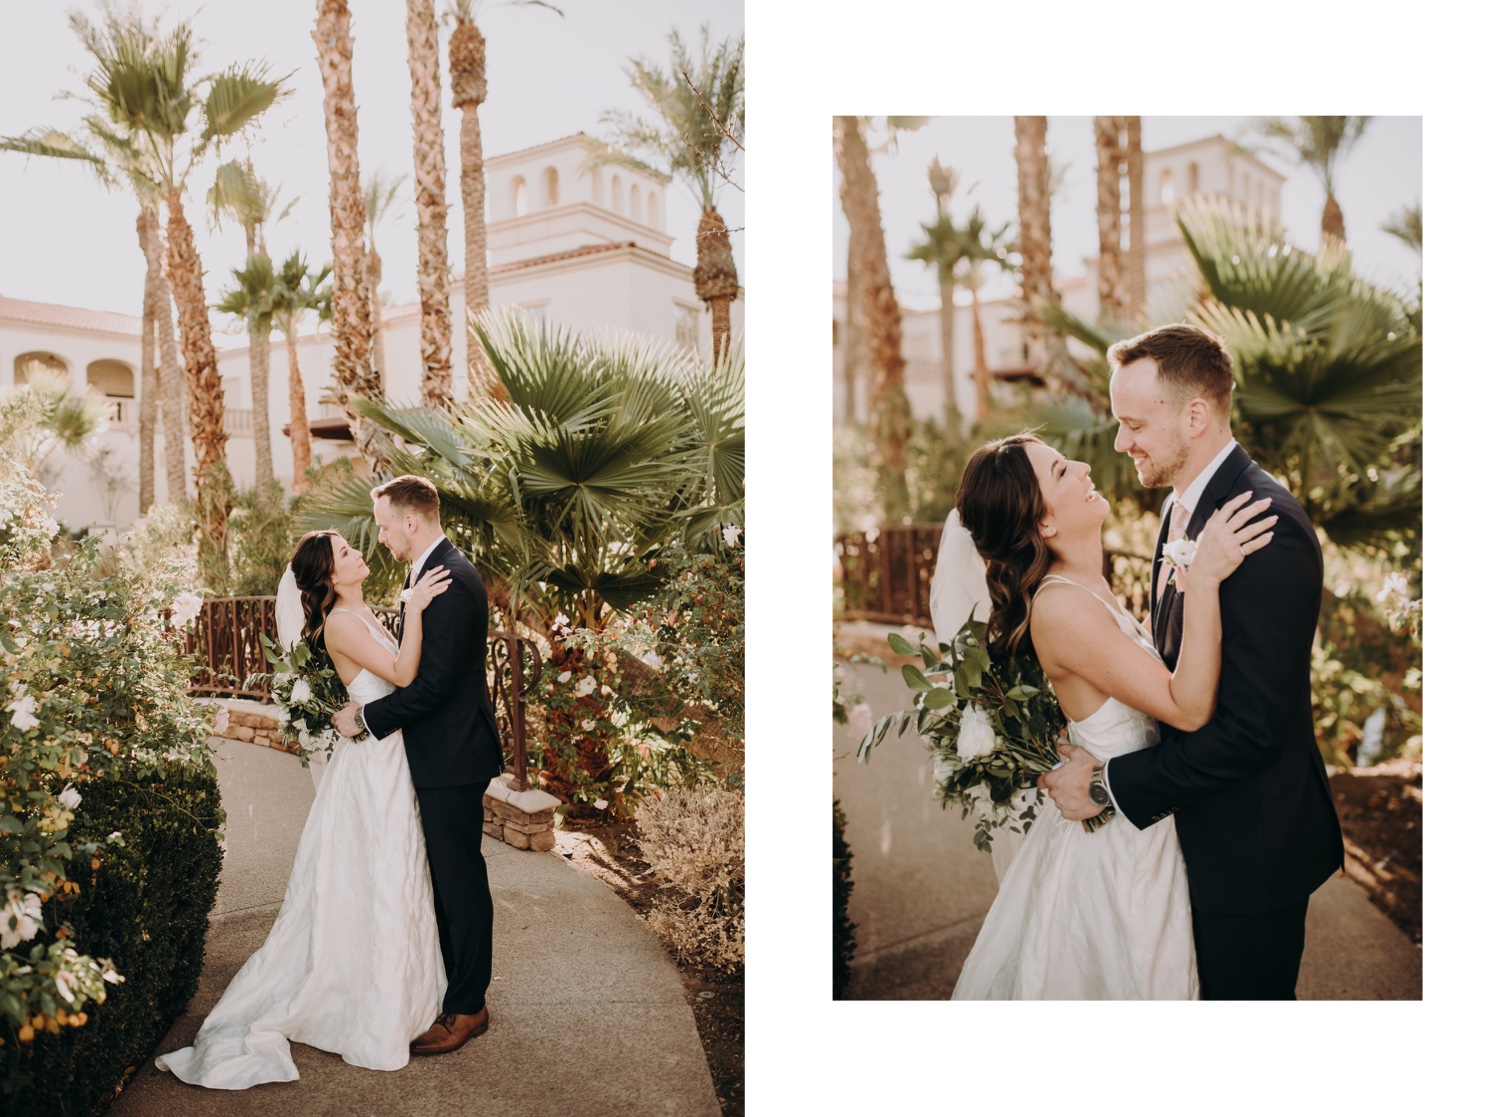 Emotional bride and groom photos - spring wedding in Las Vegas. Wedding at reflection bay golf club in henderson nevada. 